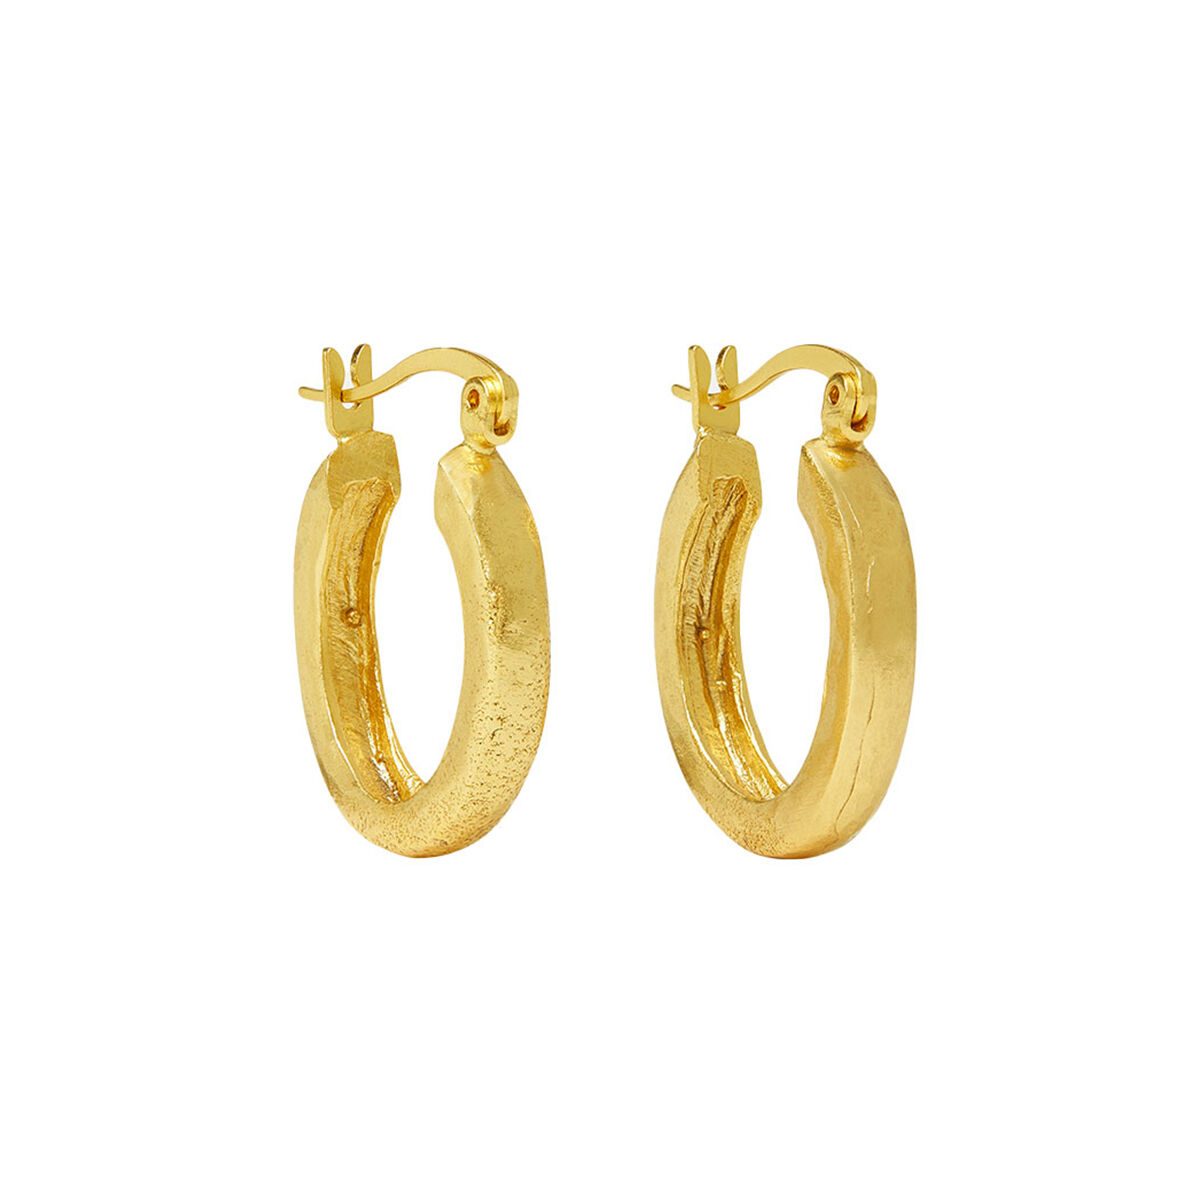 Caprice hoop earrings by Ottoman Hands | V&A Shop